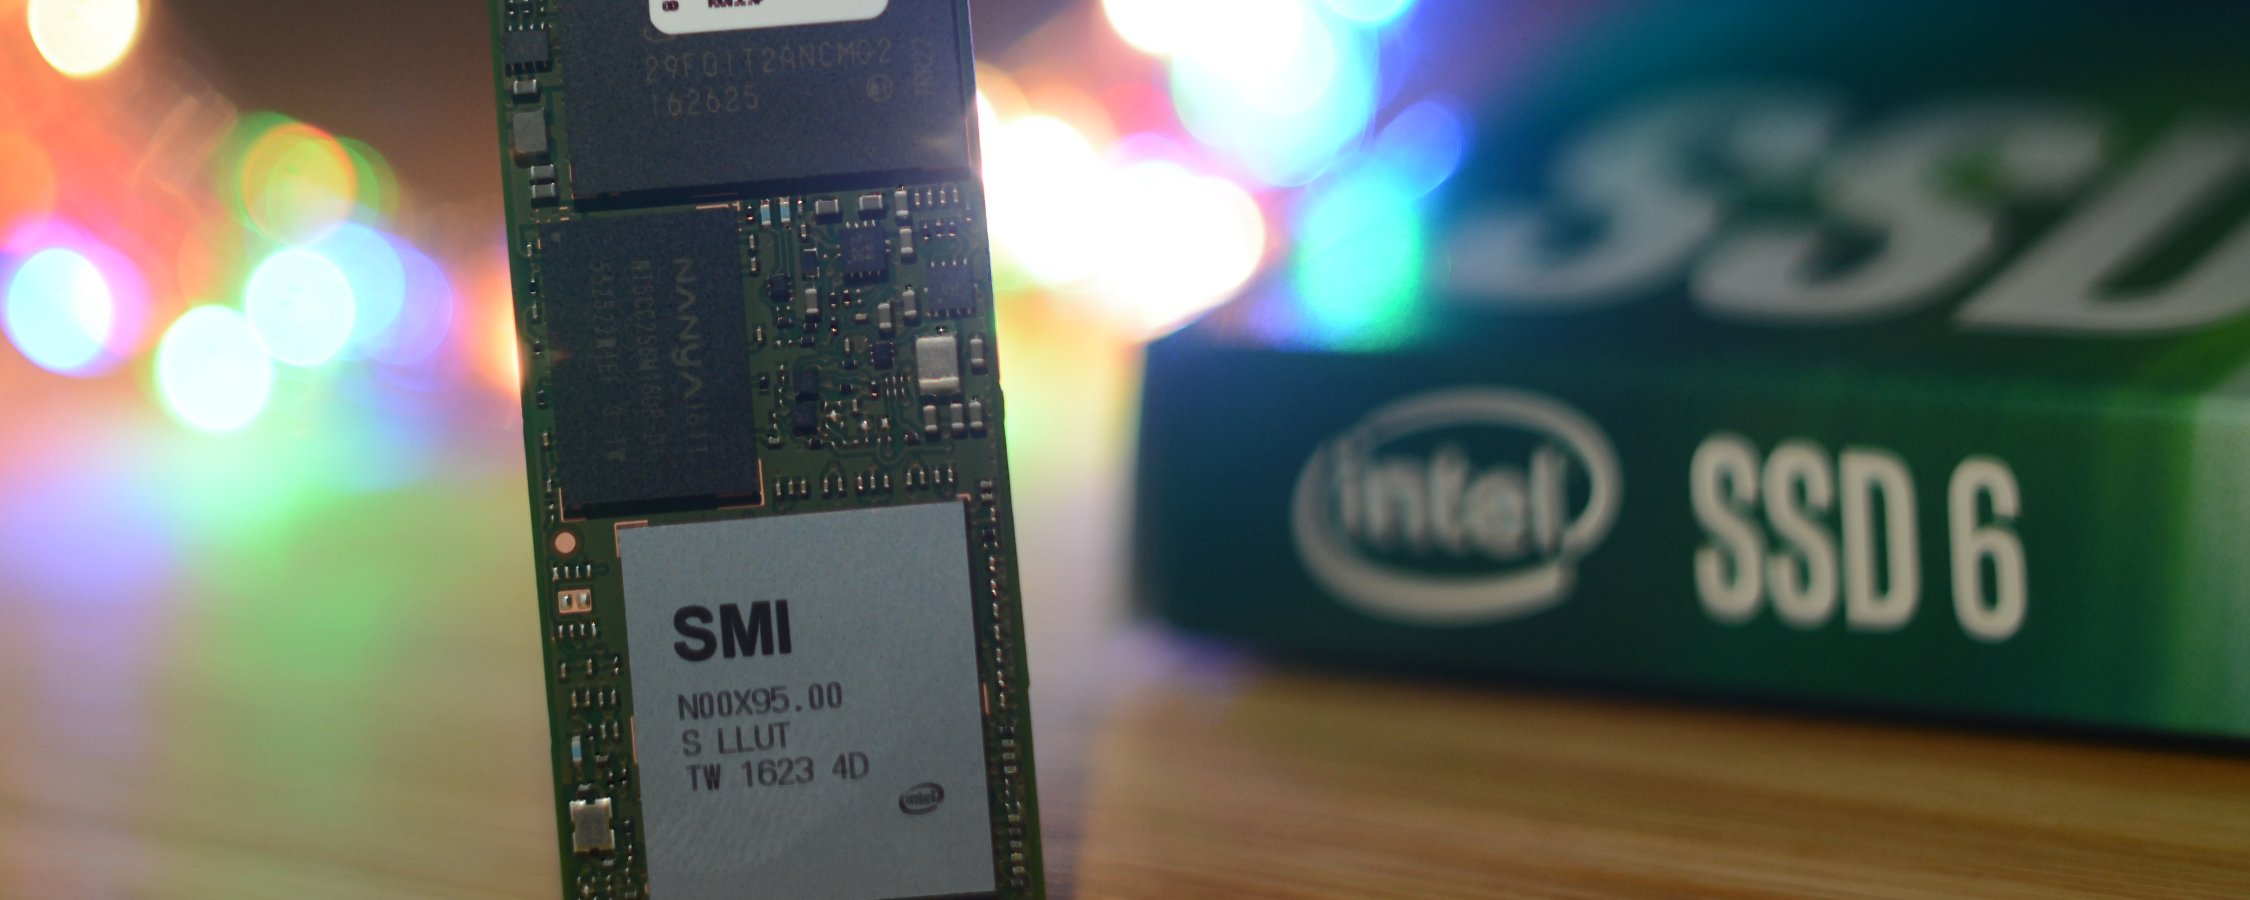 Envolver muñeca Excremento Intel SSD 600p Series 512GB Review | TechSpot